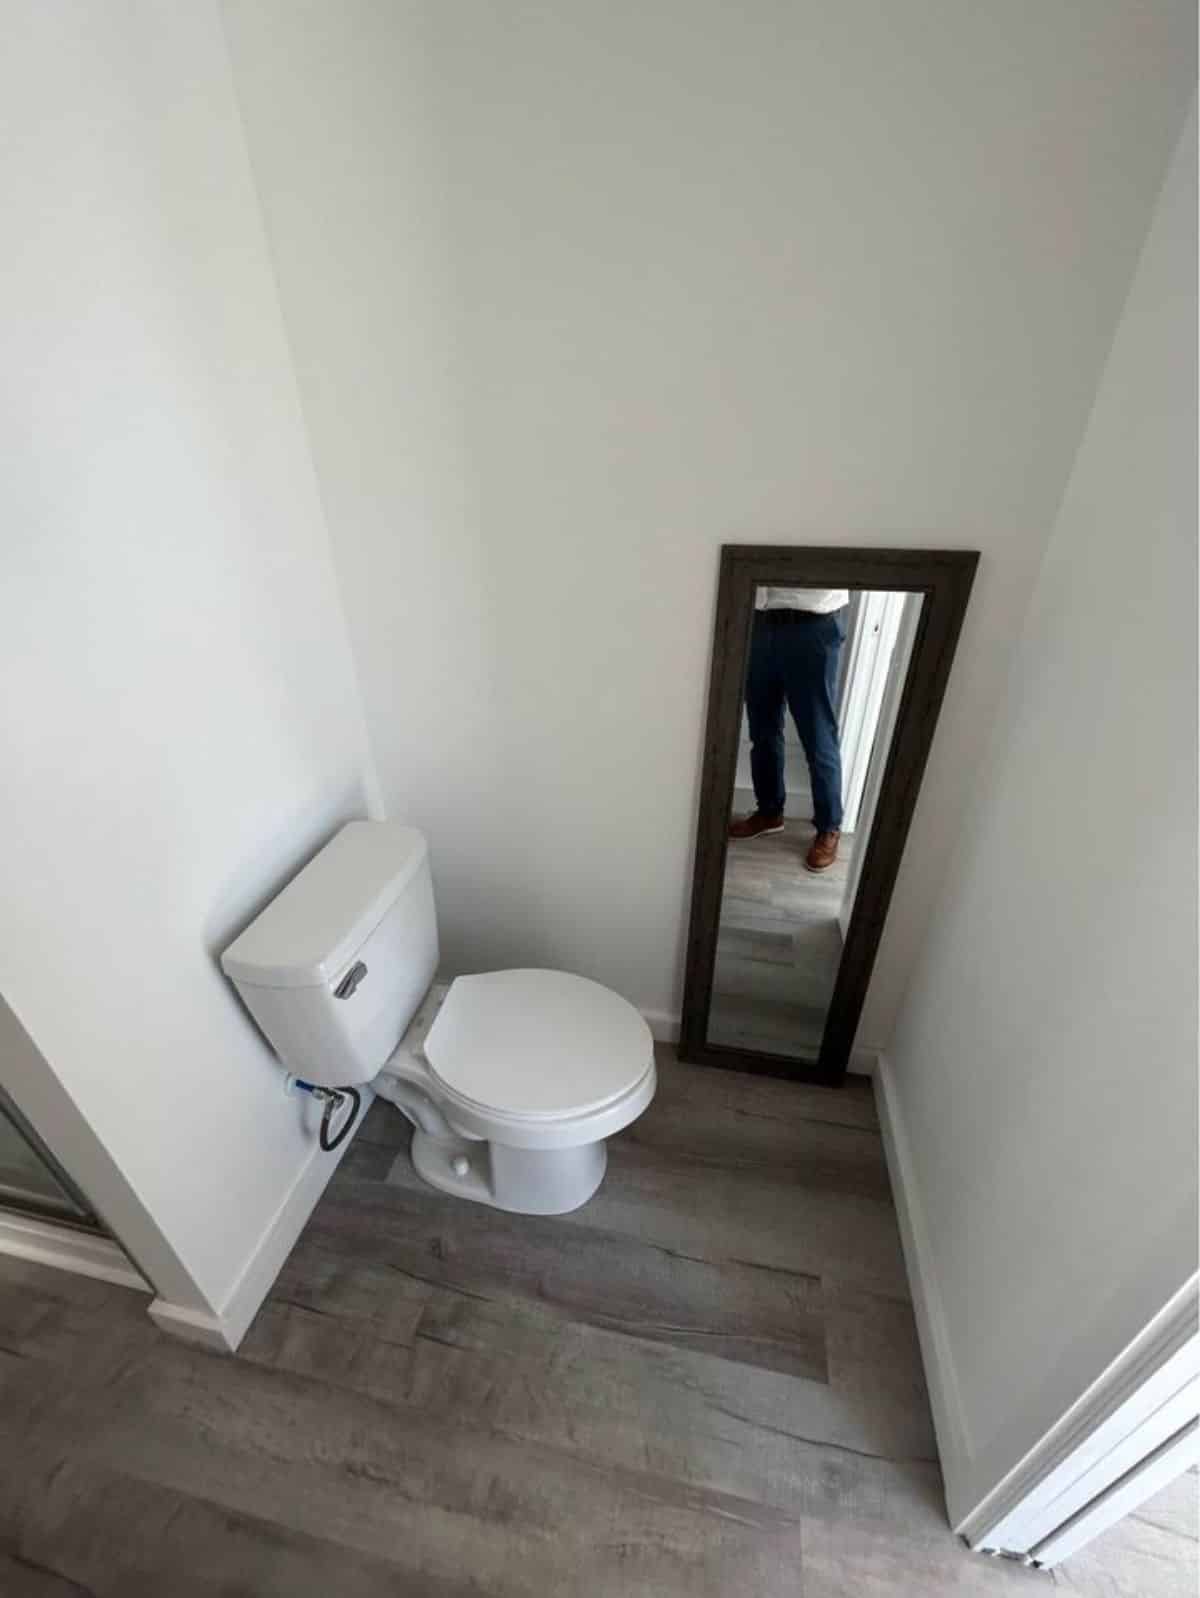 standard toilet in the bathroom